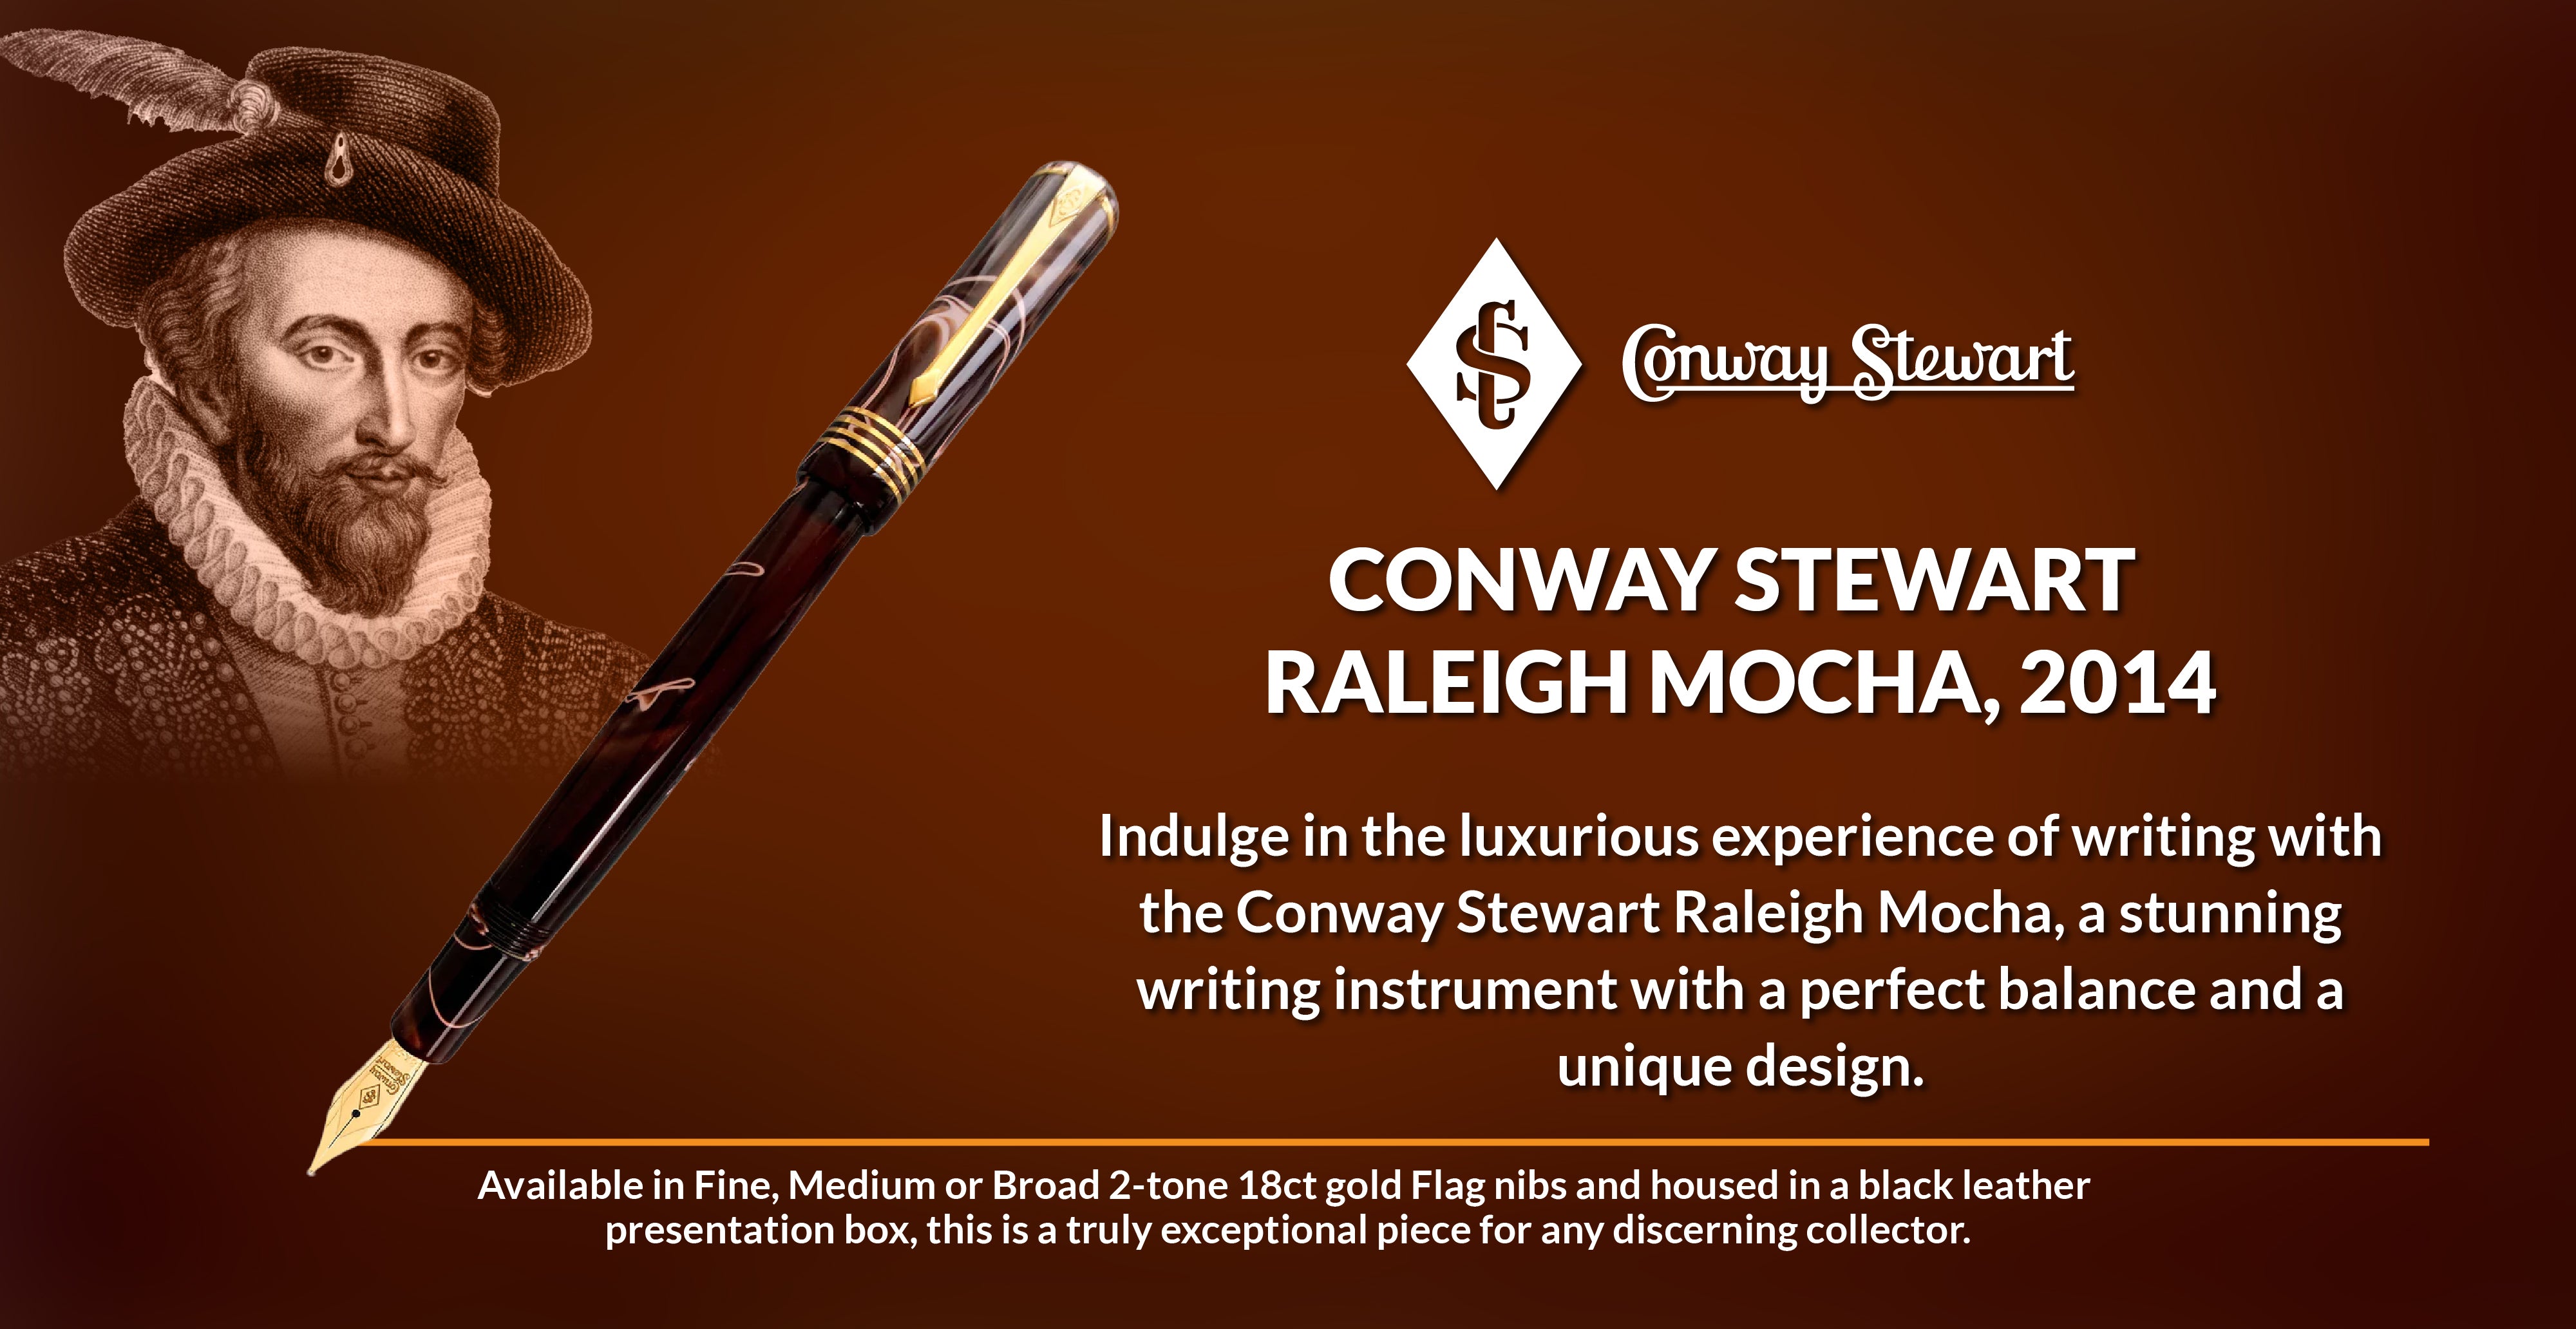 Conway Stewart Raleigh Mocha, 2014